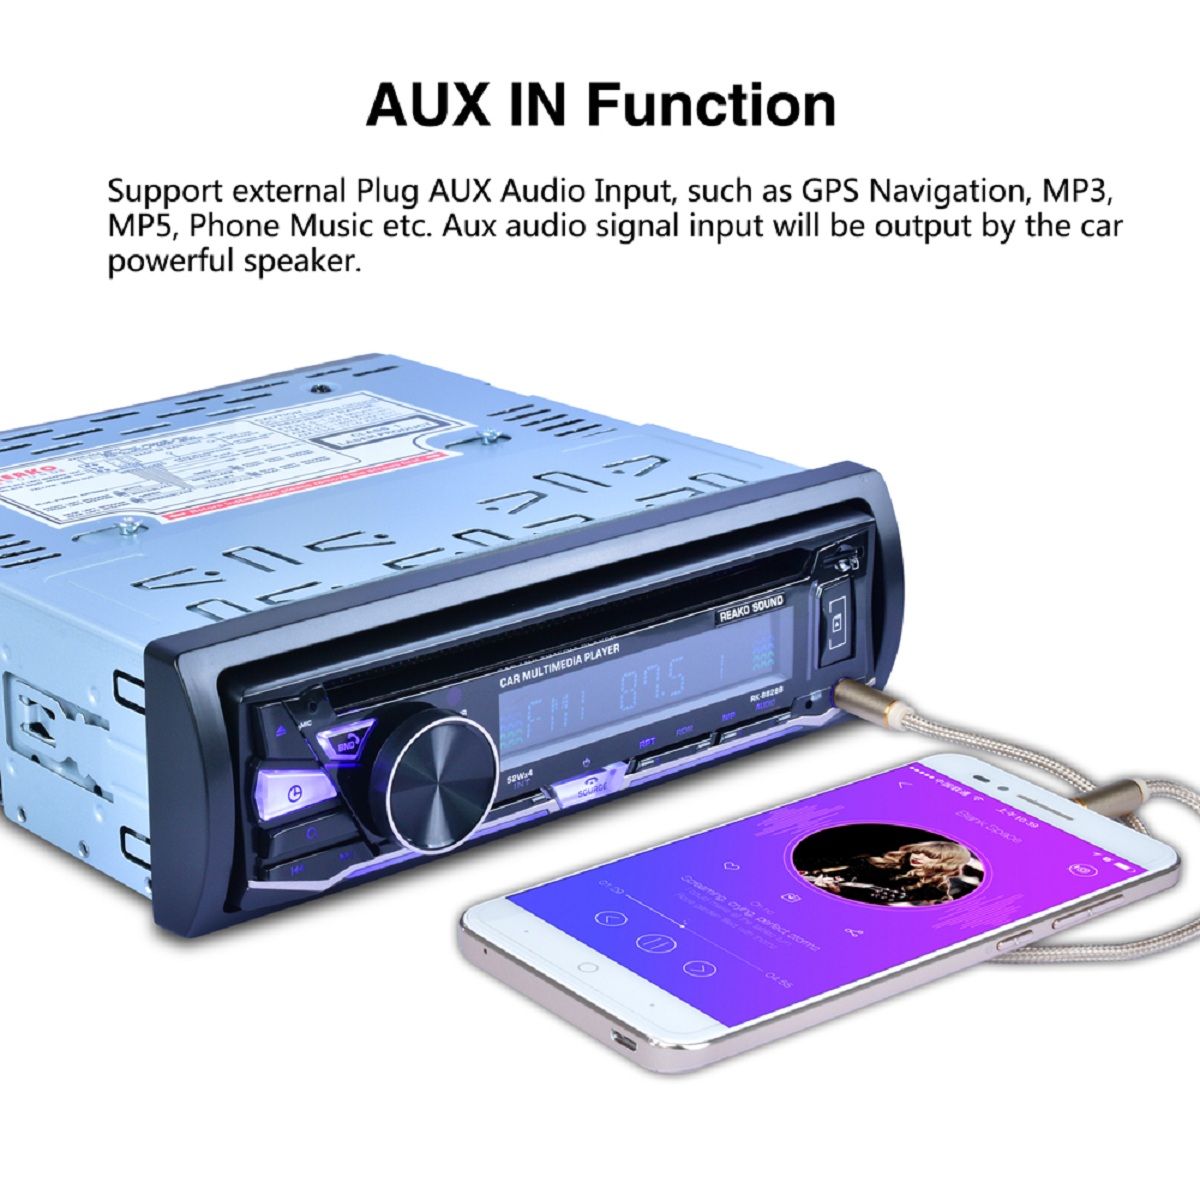 bluetooth-Car-Multimedia-DVD-Player-with-BT--DISC--FMAM-Radio--RDS-Receiver-1161391